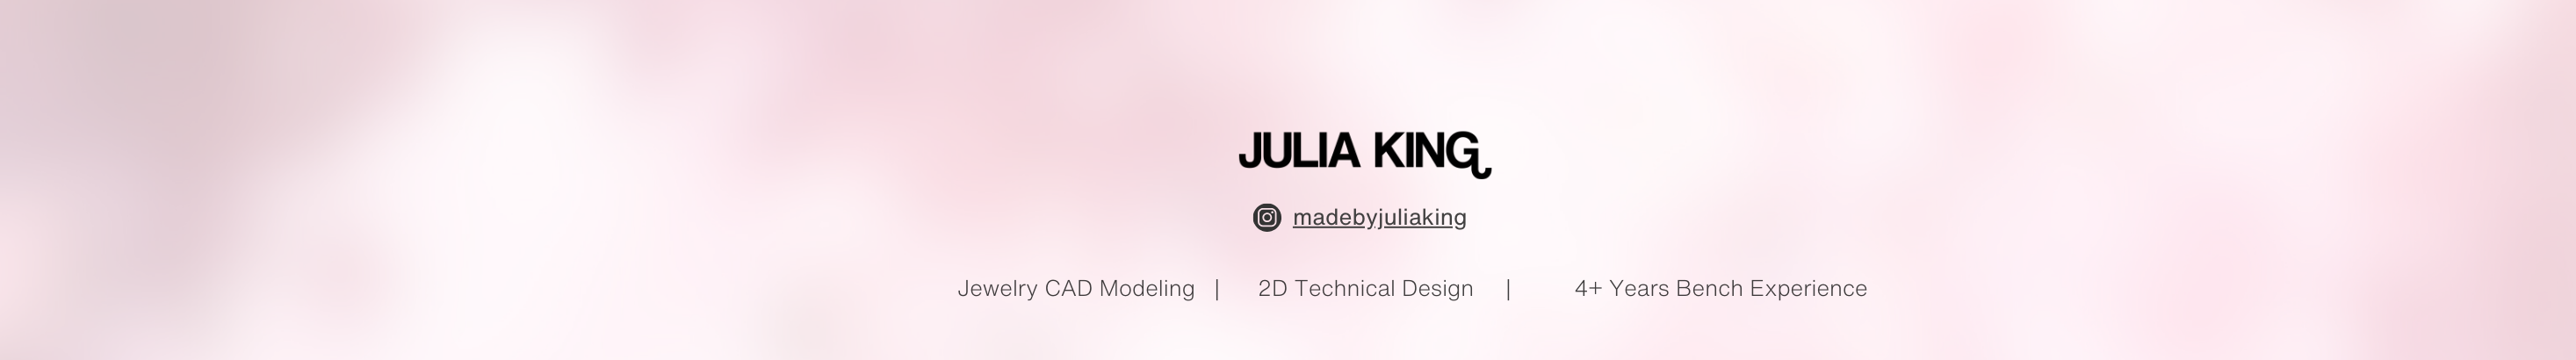 Julia Kings profilbanner